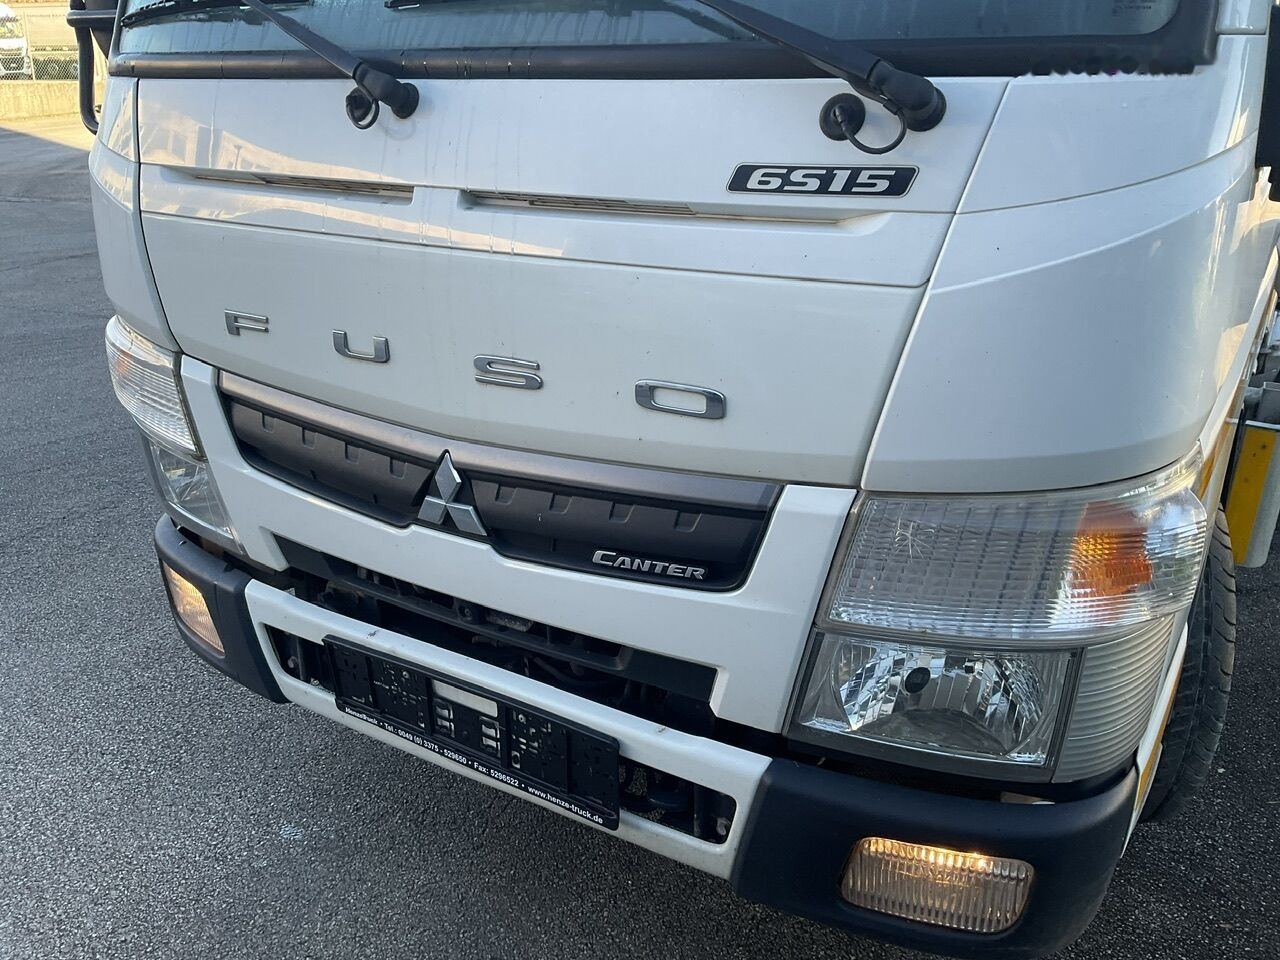 Hook lift truck Mitsubishi Fuso 6S15